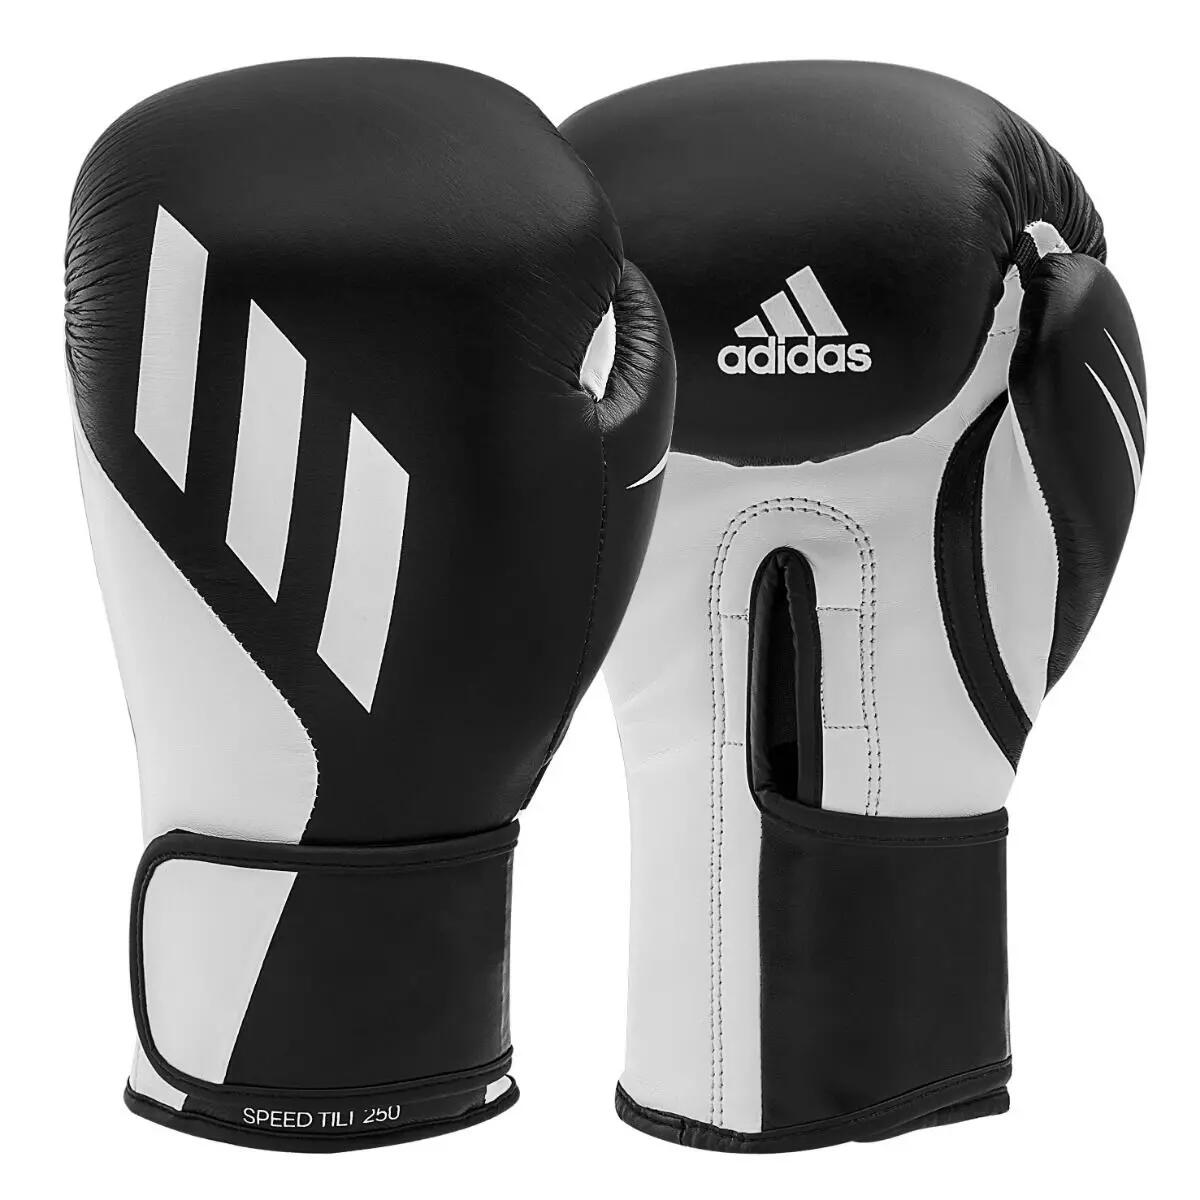 Adidas Speed Tilt 250 Boxing Gloves 1/7